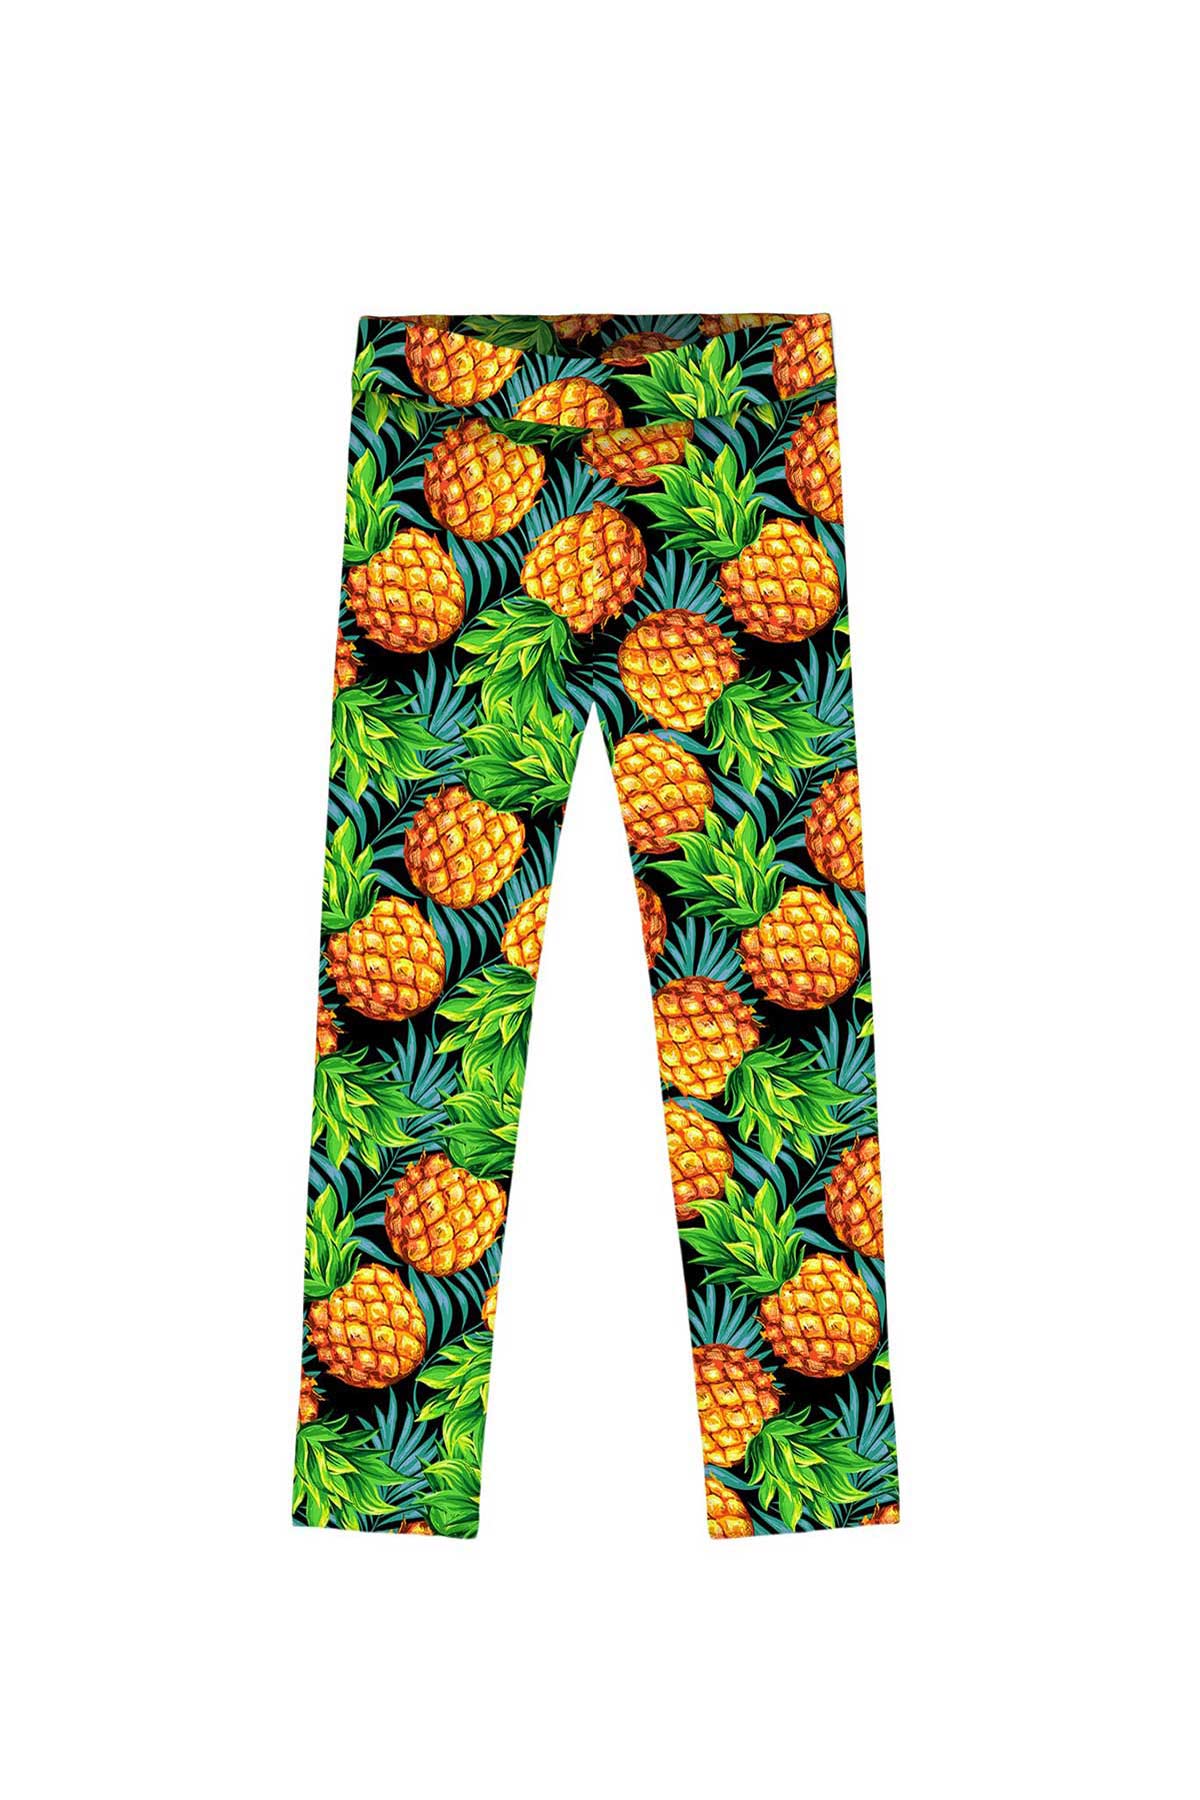 Endless Summer Lucy Green Pineapple Print Cute Leggings - Kids - Pineapple Clothing